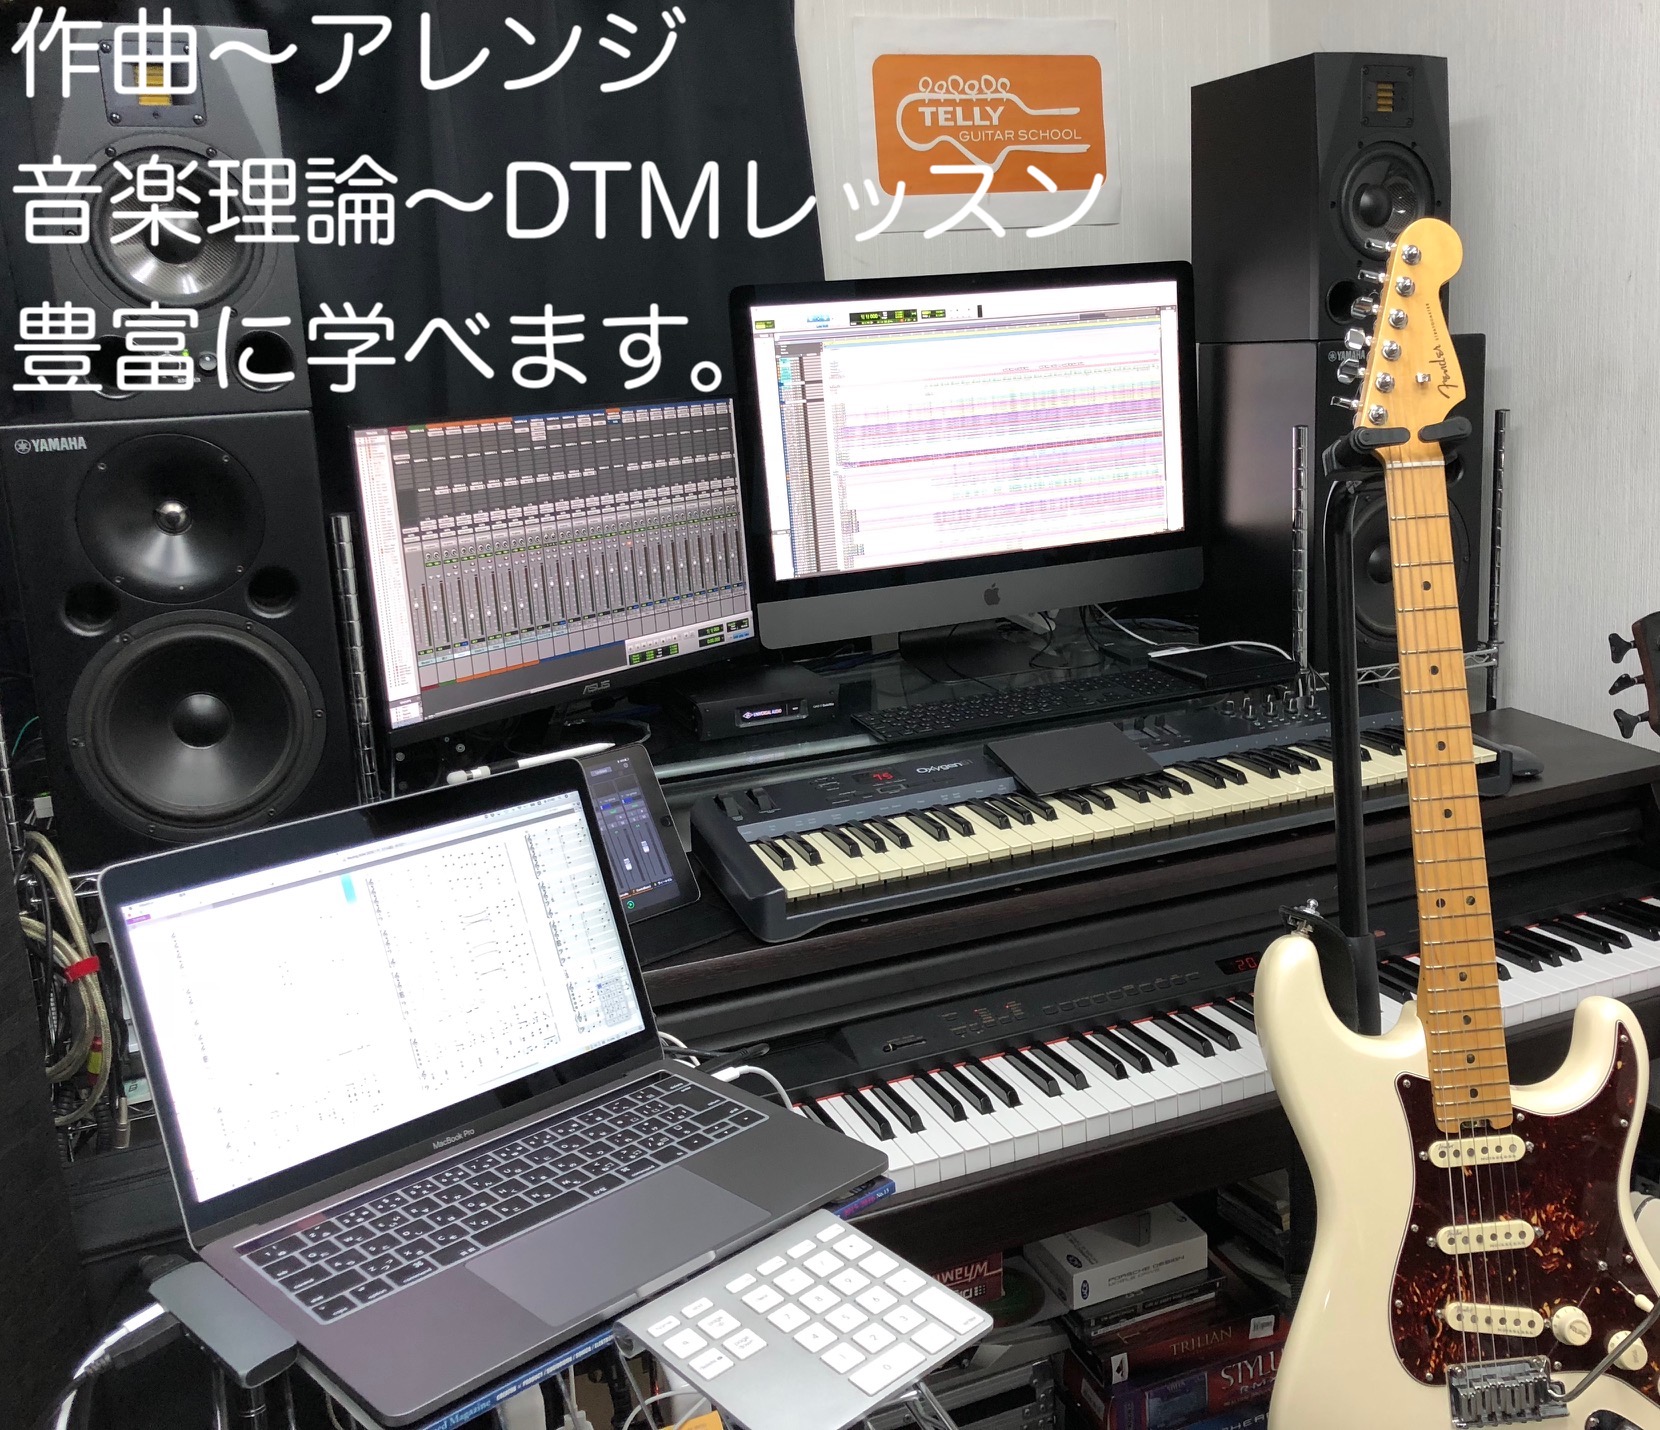 TELLYギター教室のデスクトップ・ミュージック（DTM）作業場